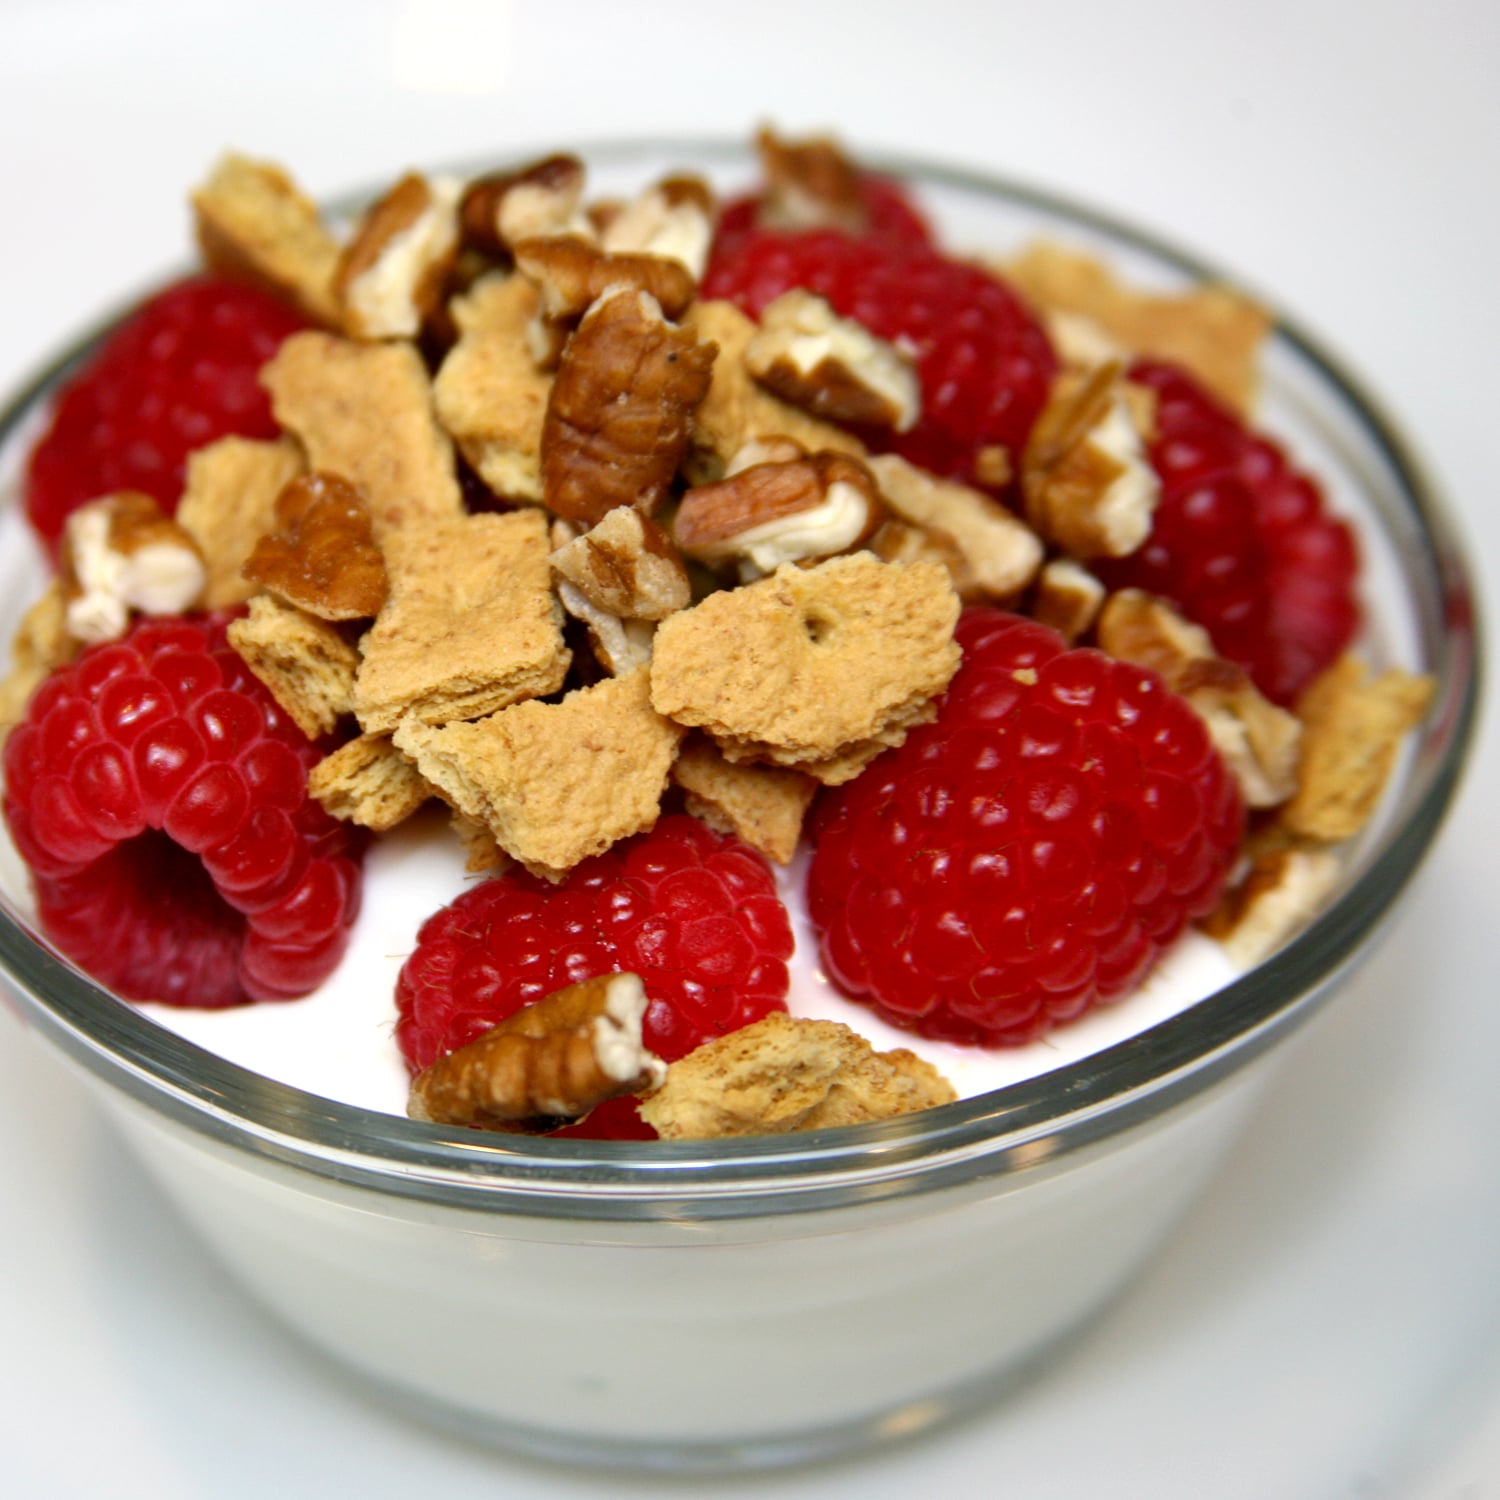 Healthy Yogurt Topping Ideas | POPSUGAR Fitness